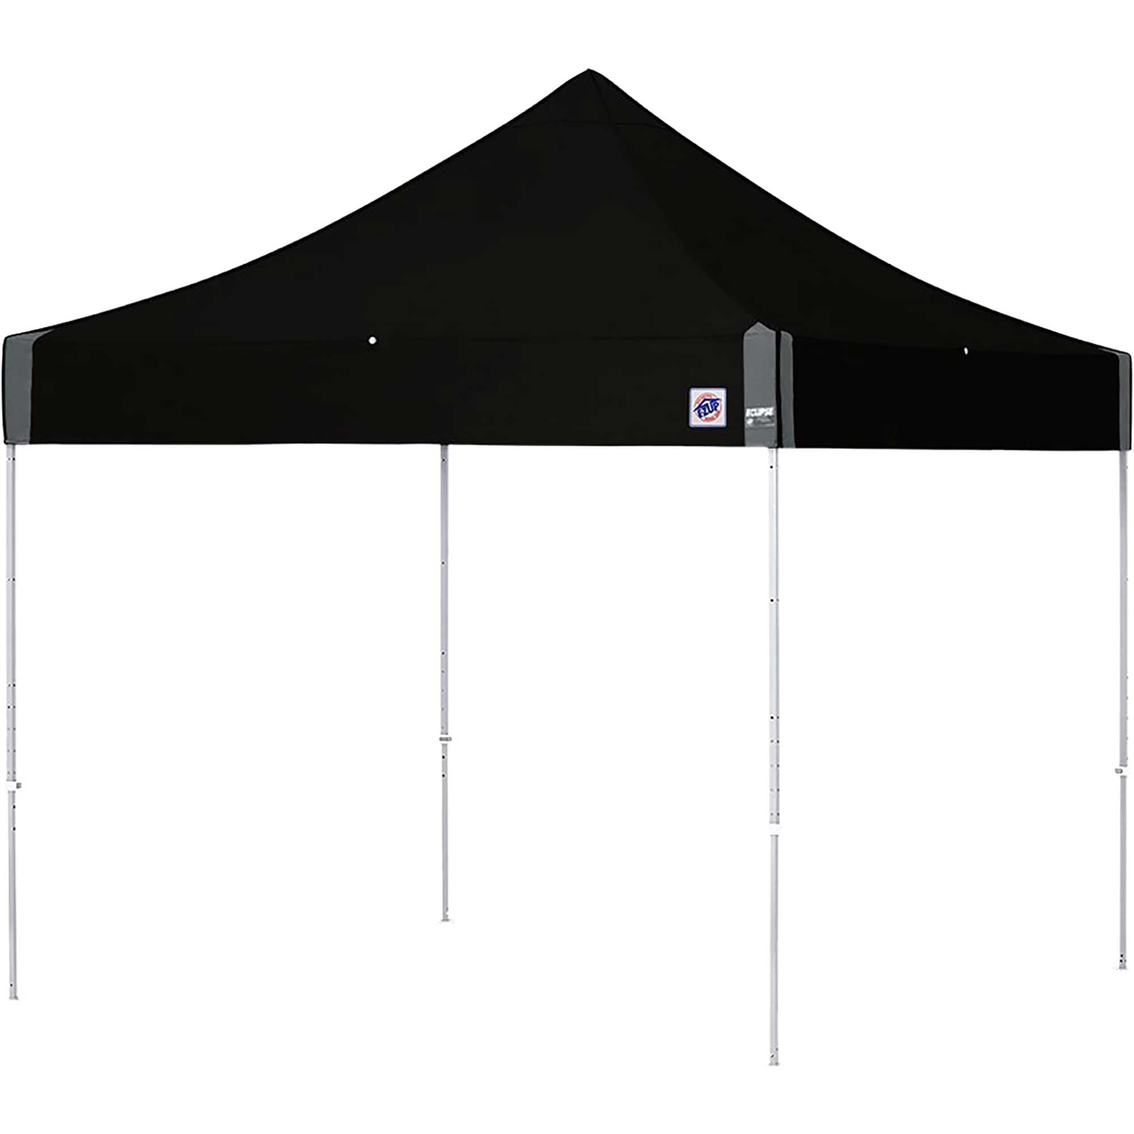 International EZ-Up Eclipse Instant Shelter Canopy 10 x 10 ft.